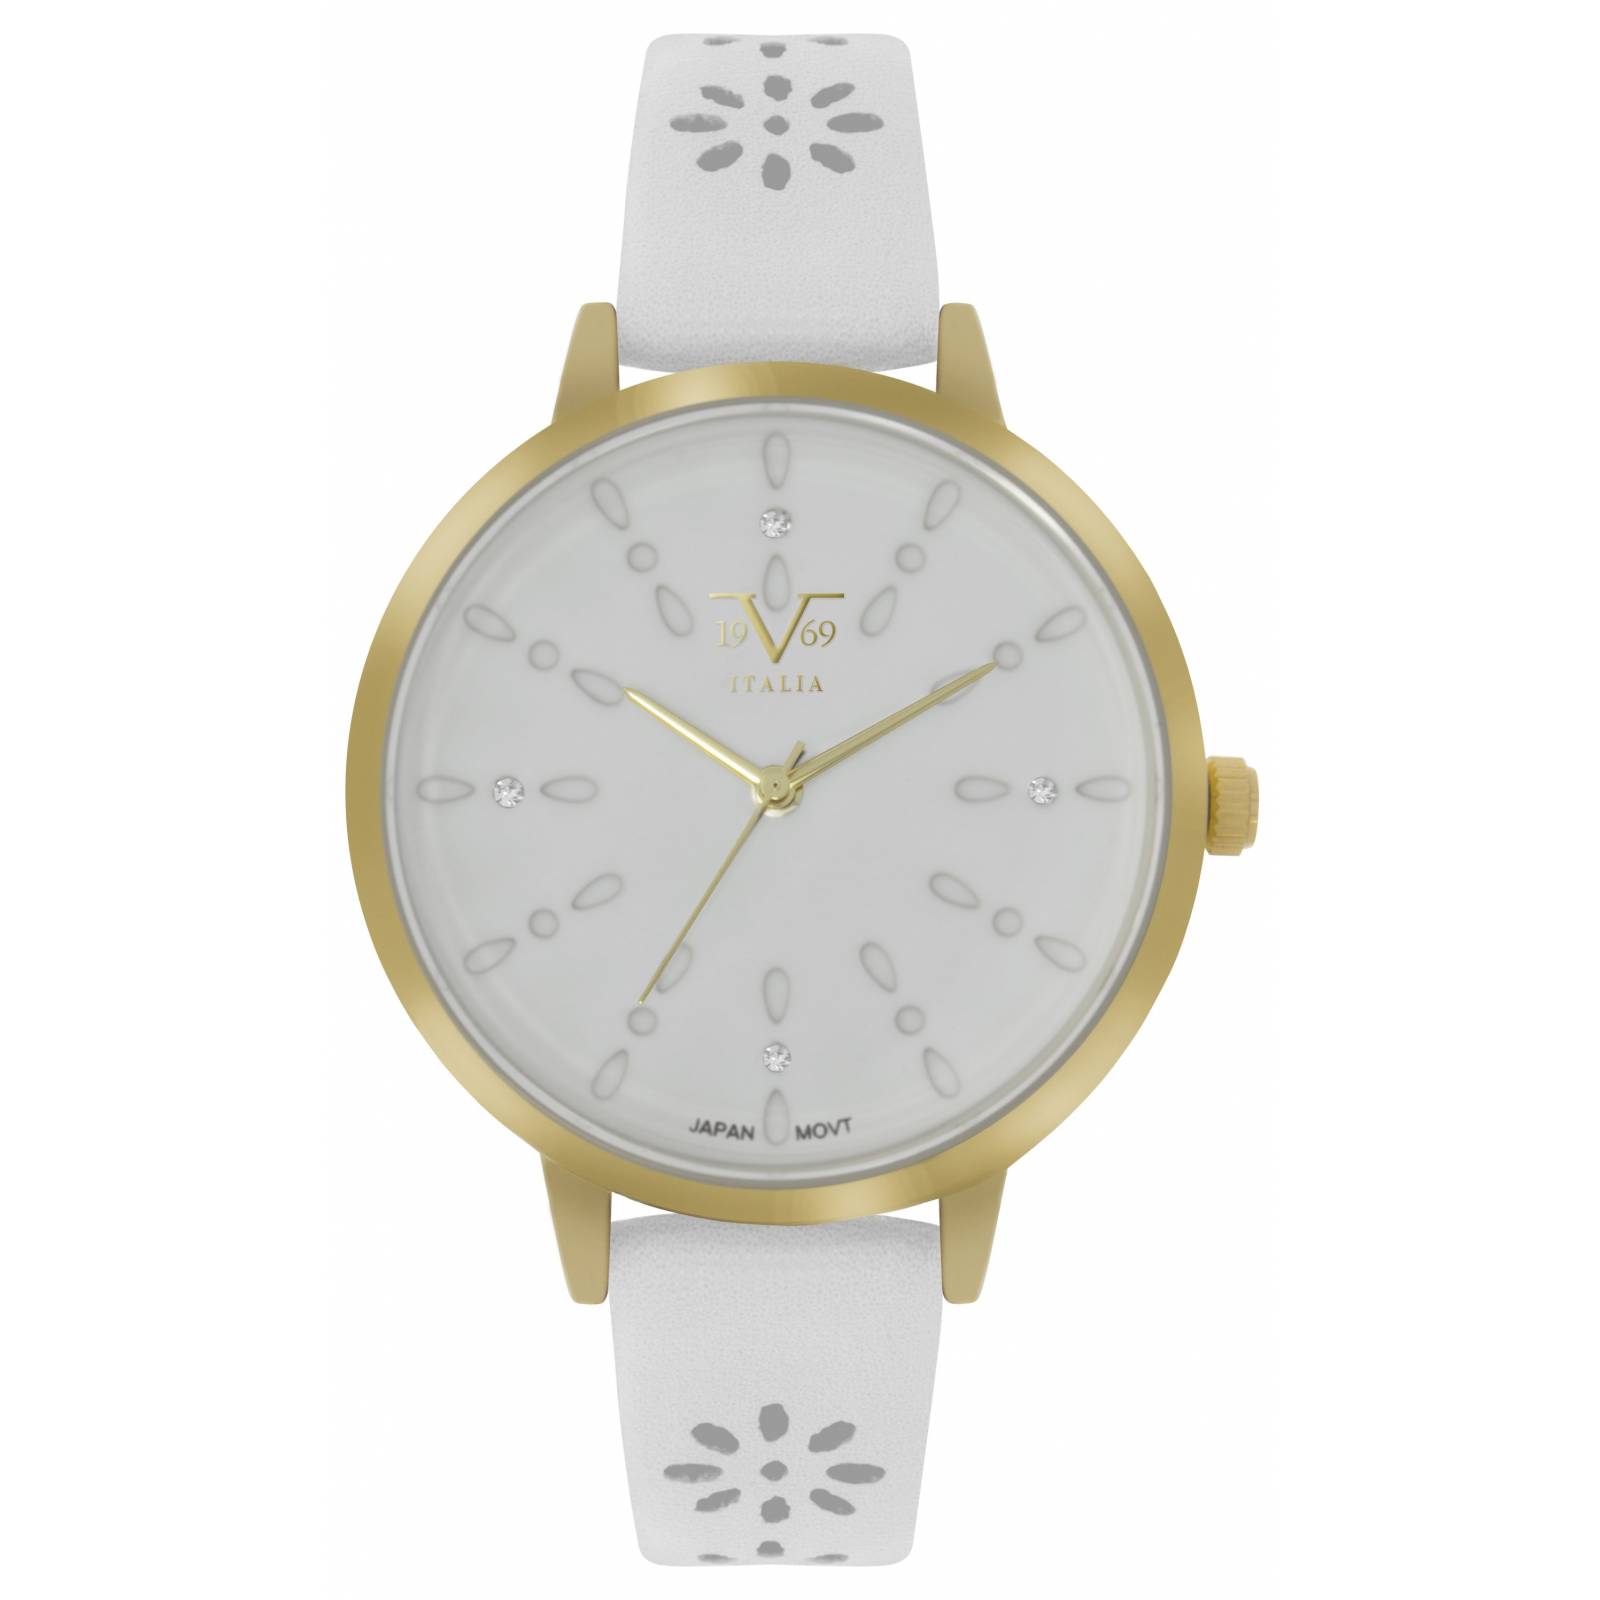 Reloj Versace 1969 Italia V1969 103 2 Dama